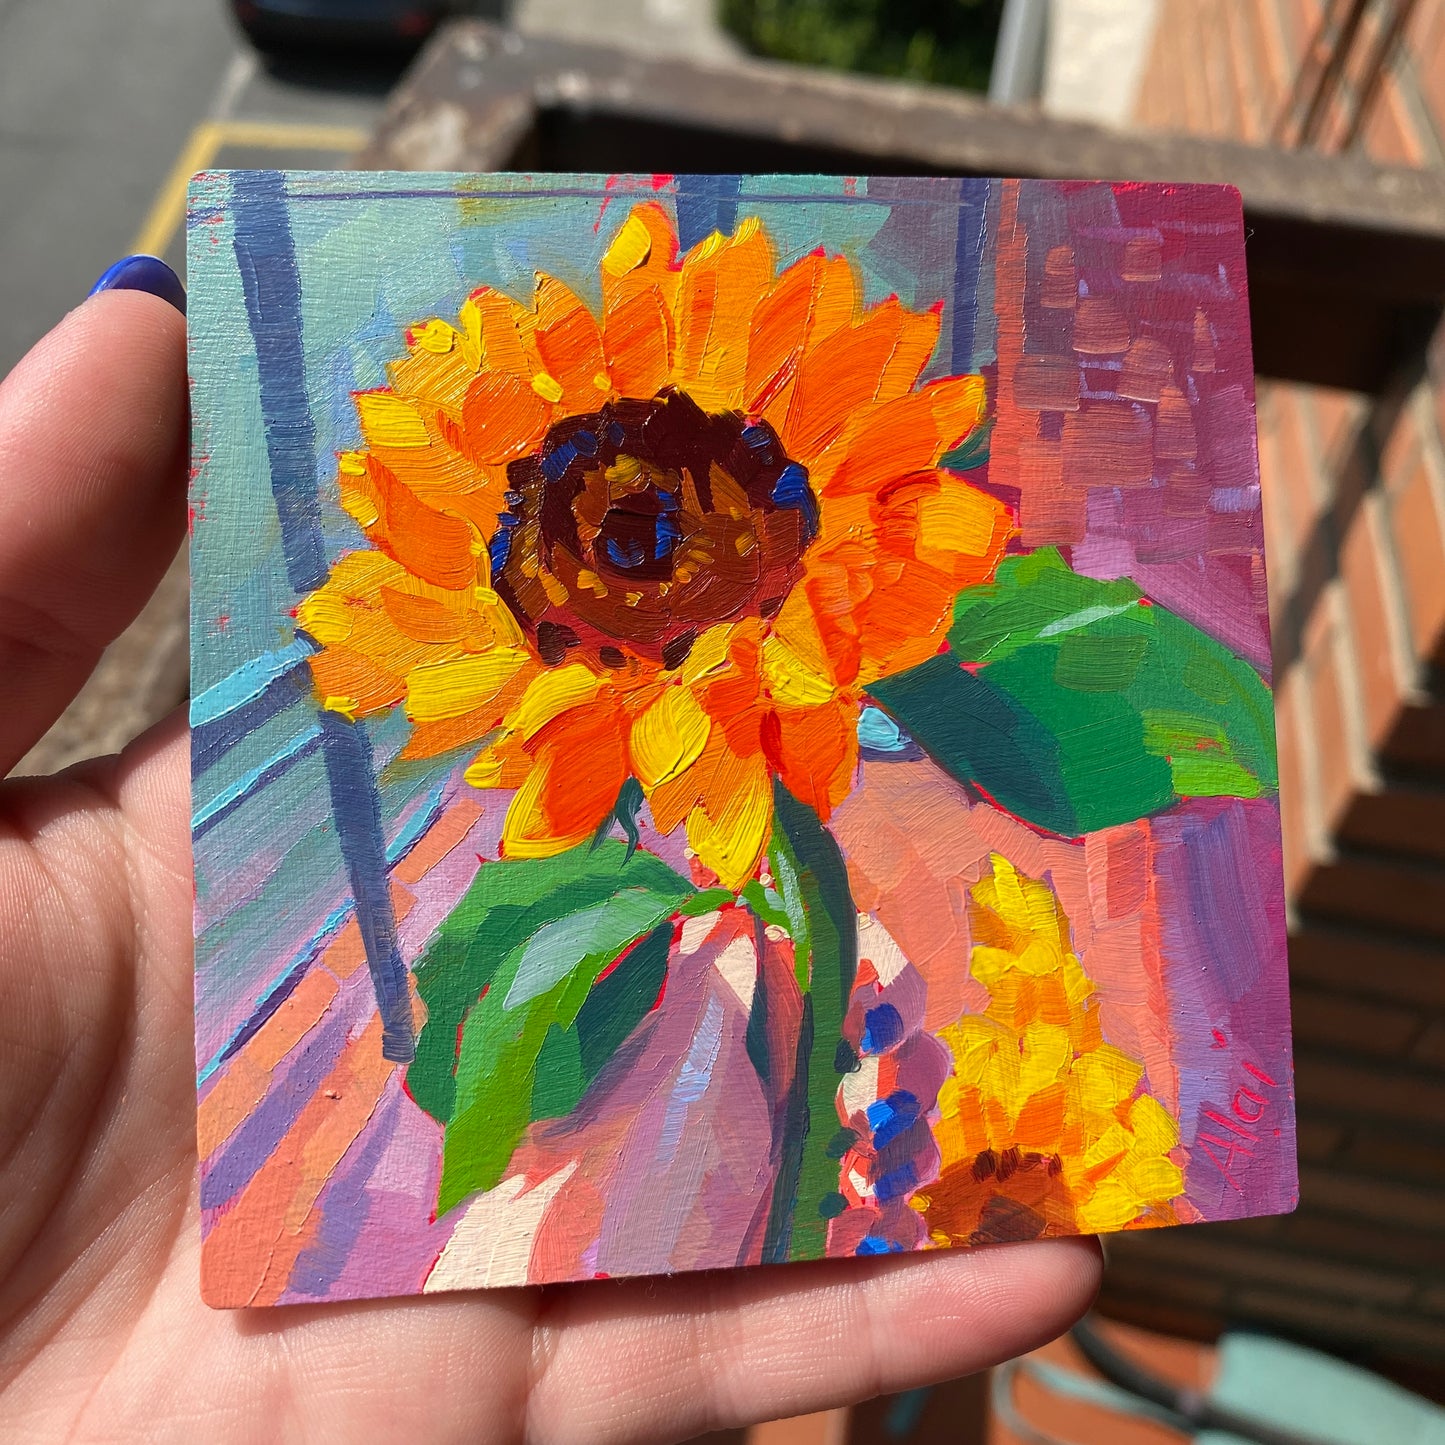 Sunflower study - Original oil mini painting